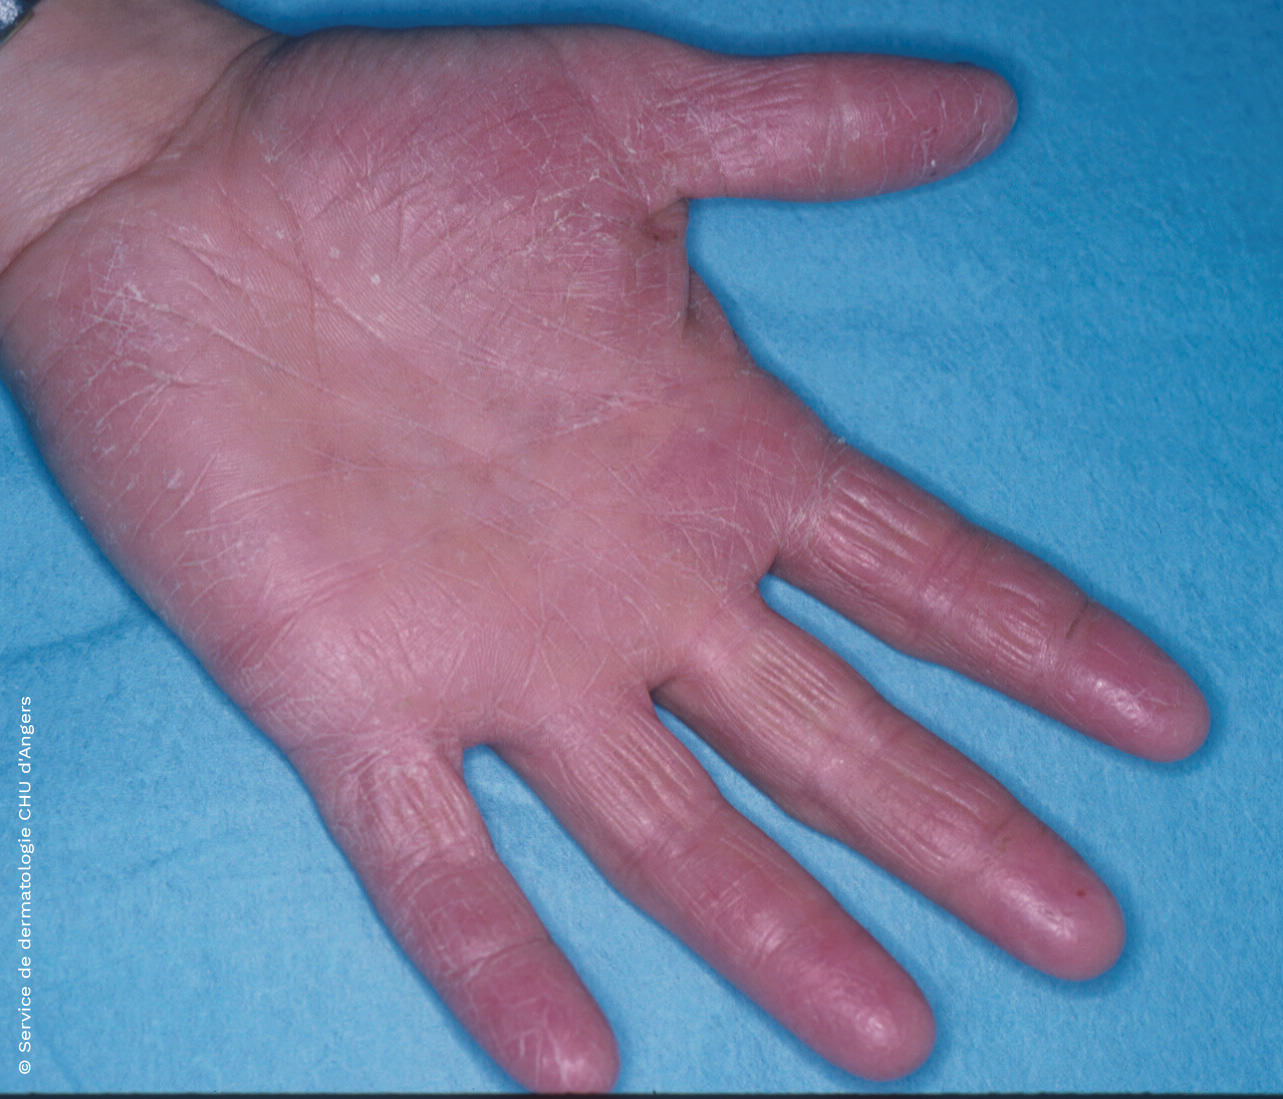 Irritative eczema of the hand